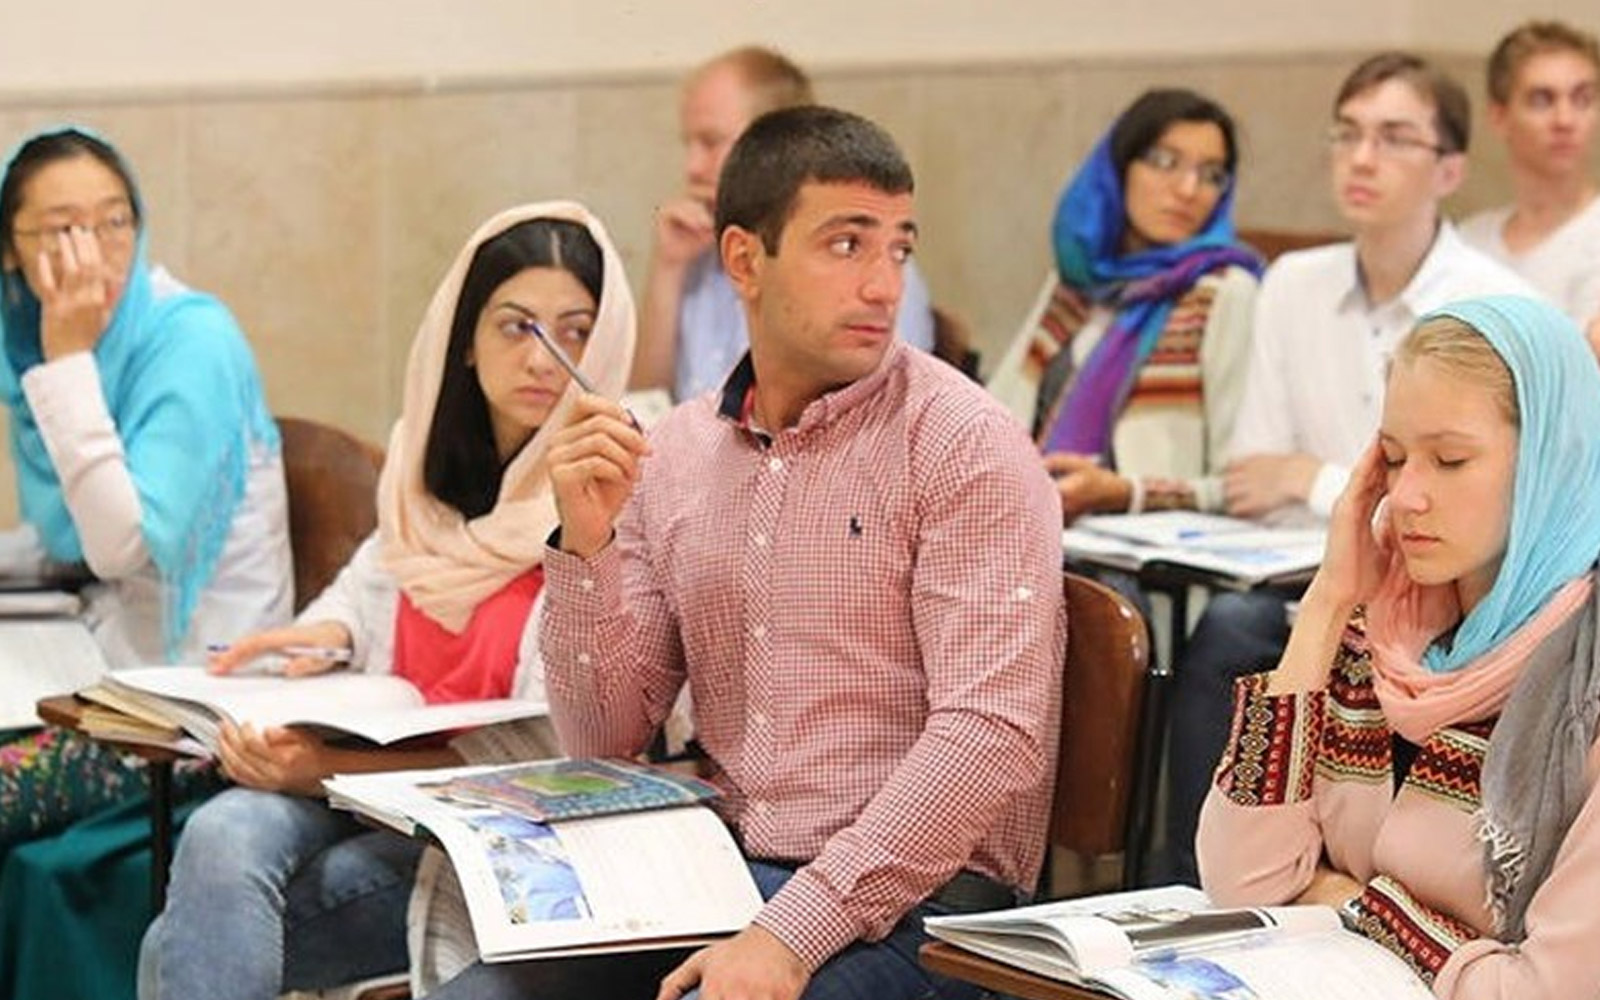 Iran top universities for international student recruitment